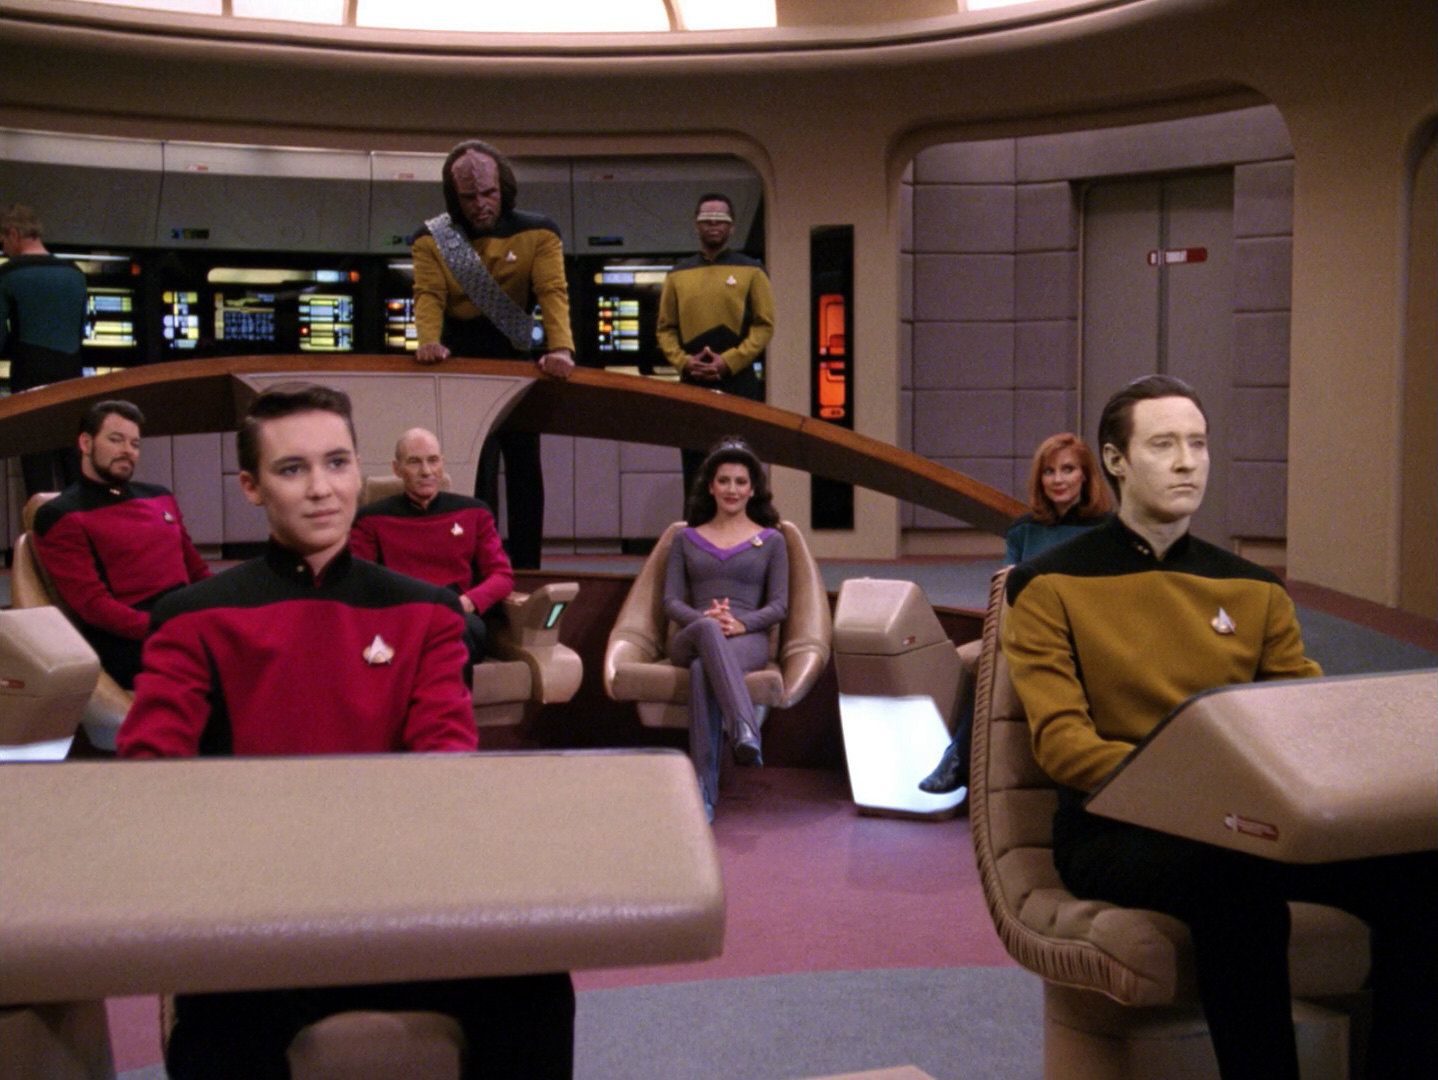 Star Trek 15 Things About Wesley Crusher That Make No Sense